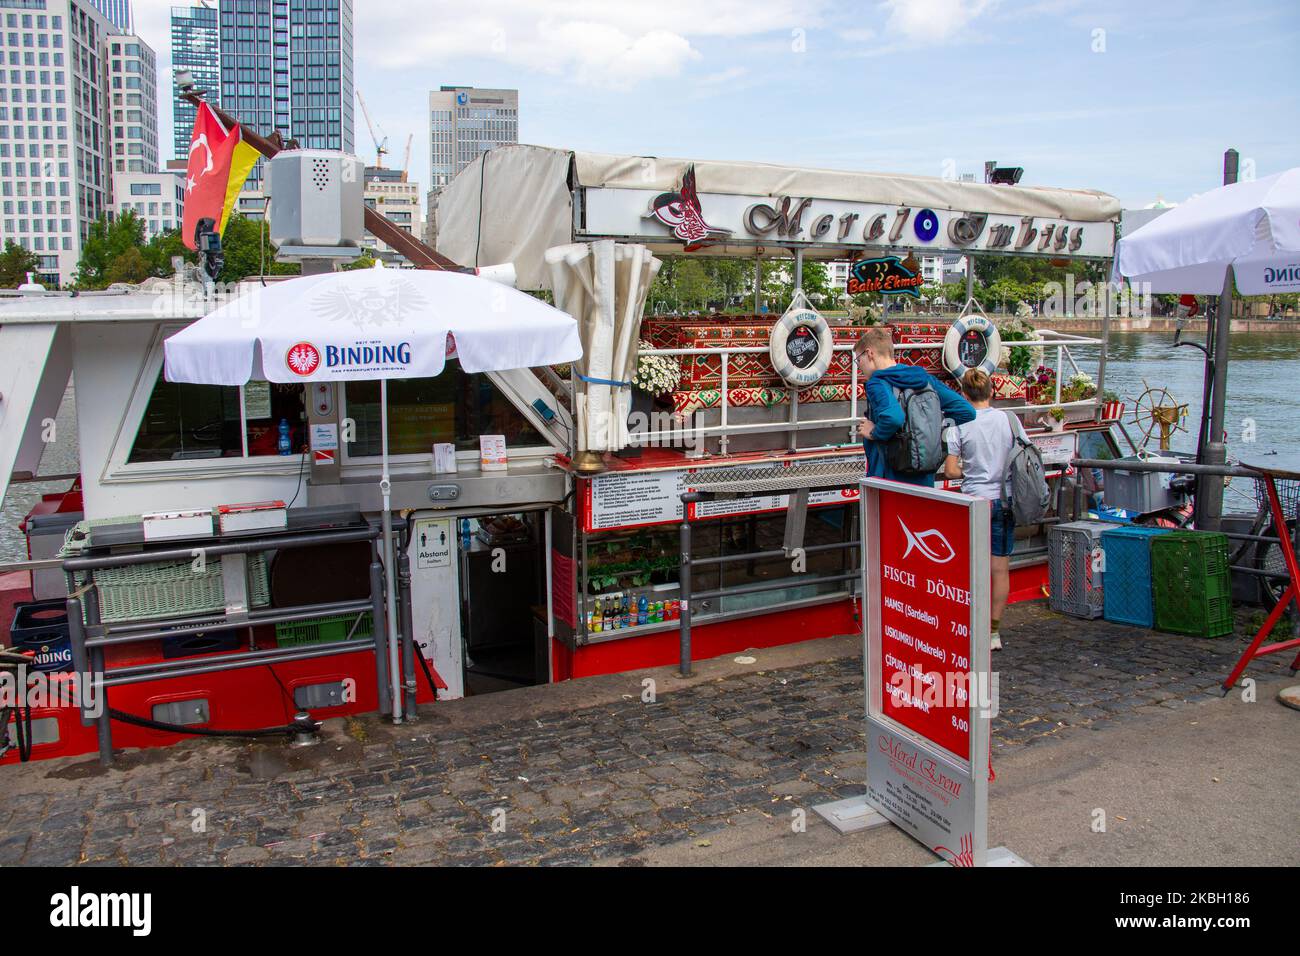 Fish Doner, Meral Imbiss boat restaurant, Frankfurt, Germany Stock Photo